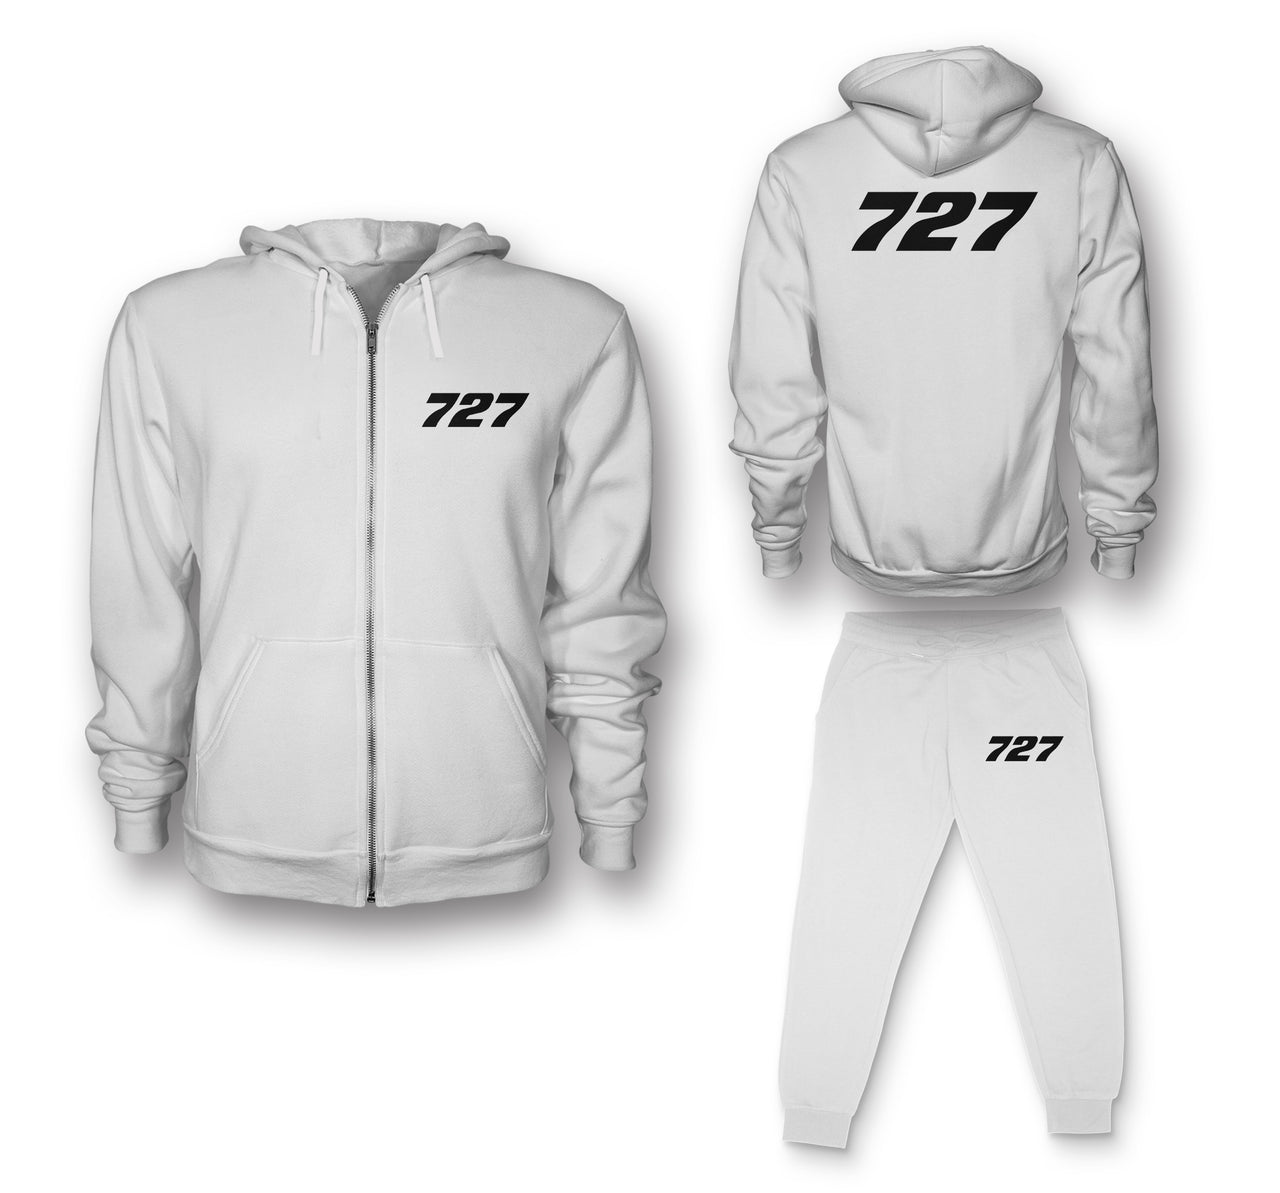 727 Flat Text Designed Zipped Hoodies & Sweatpants Set